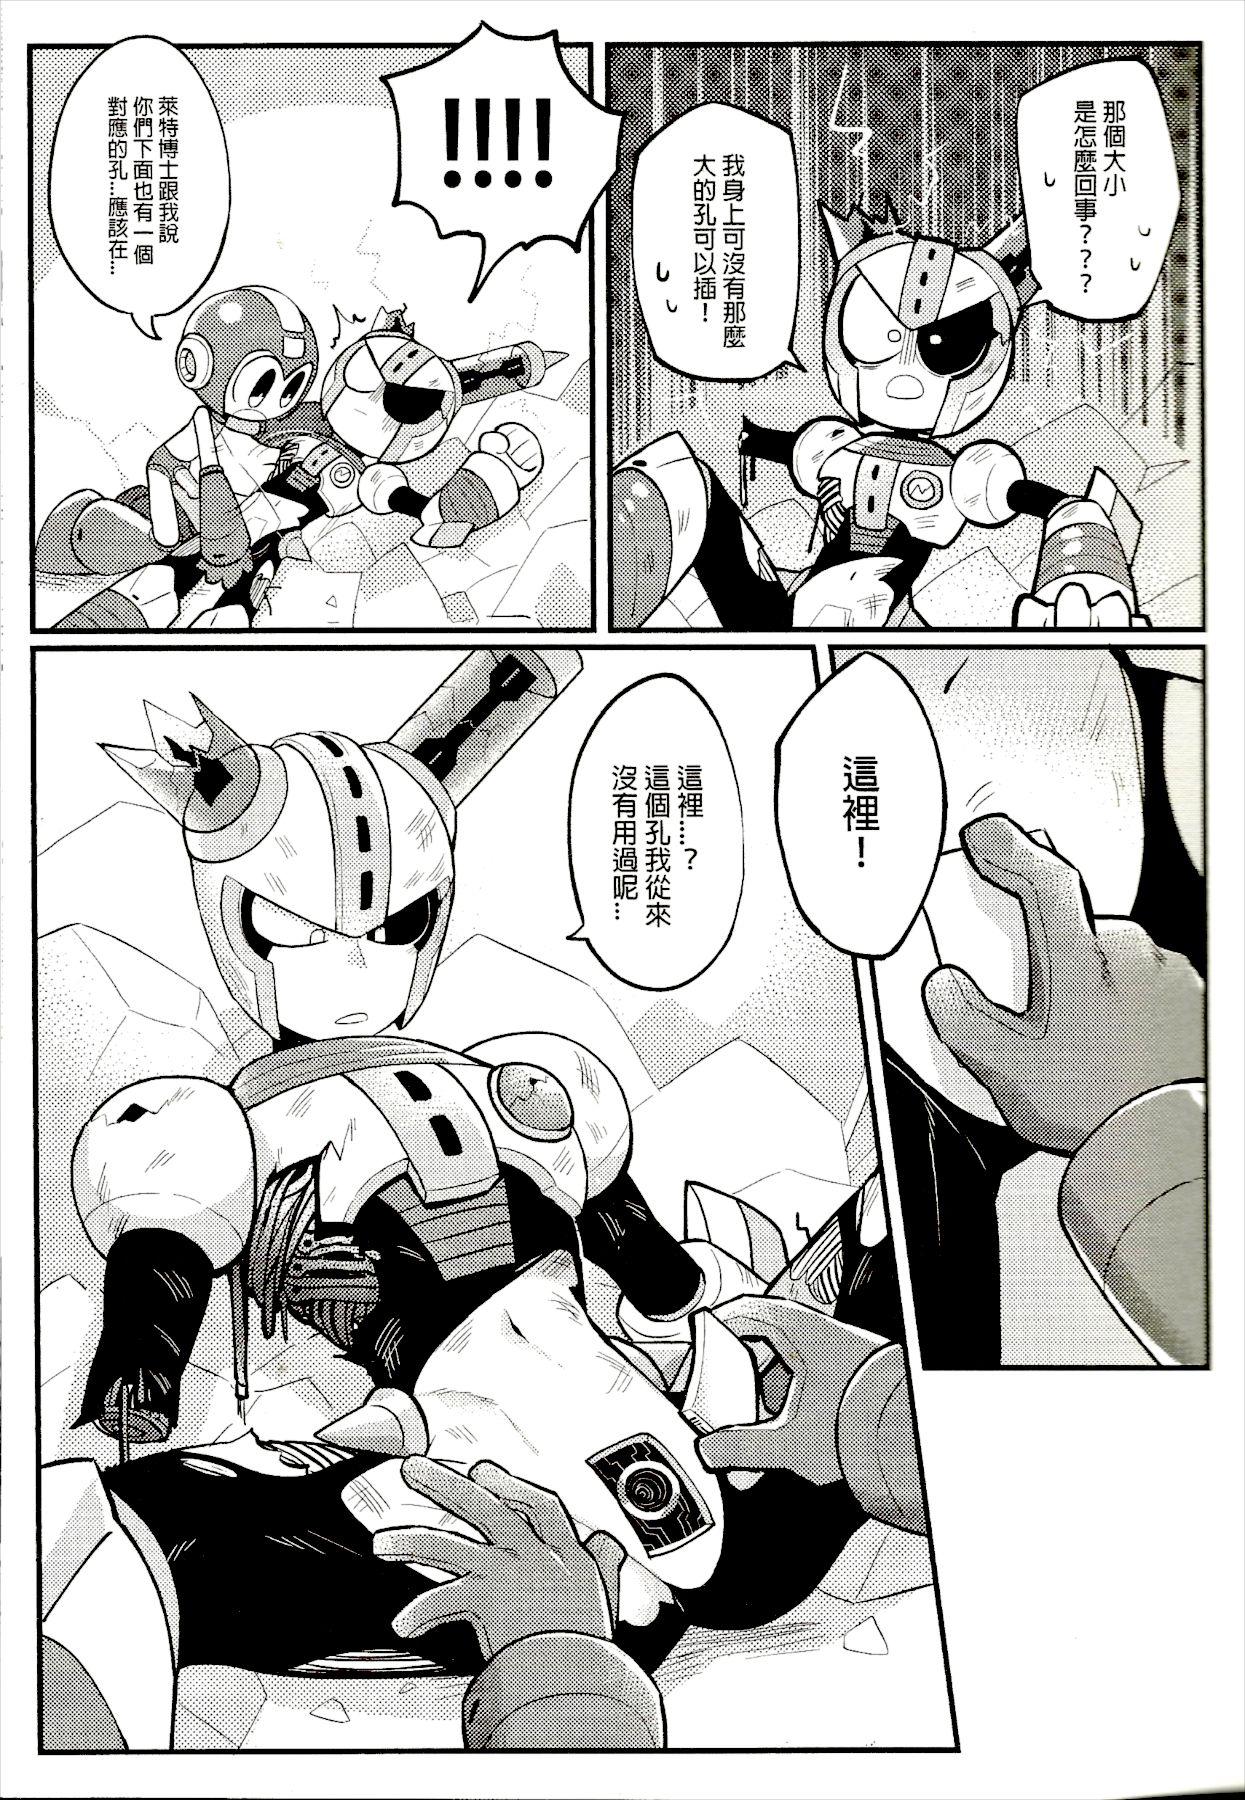 Stretch (Finish Prison) Luòkè rén 11-FUSEMAN gōnglüè běn | "Rockman 11-FUSEMAN Raiders" (Mega Man) - Megaman Swallow - Page 10